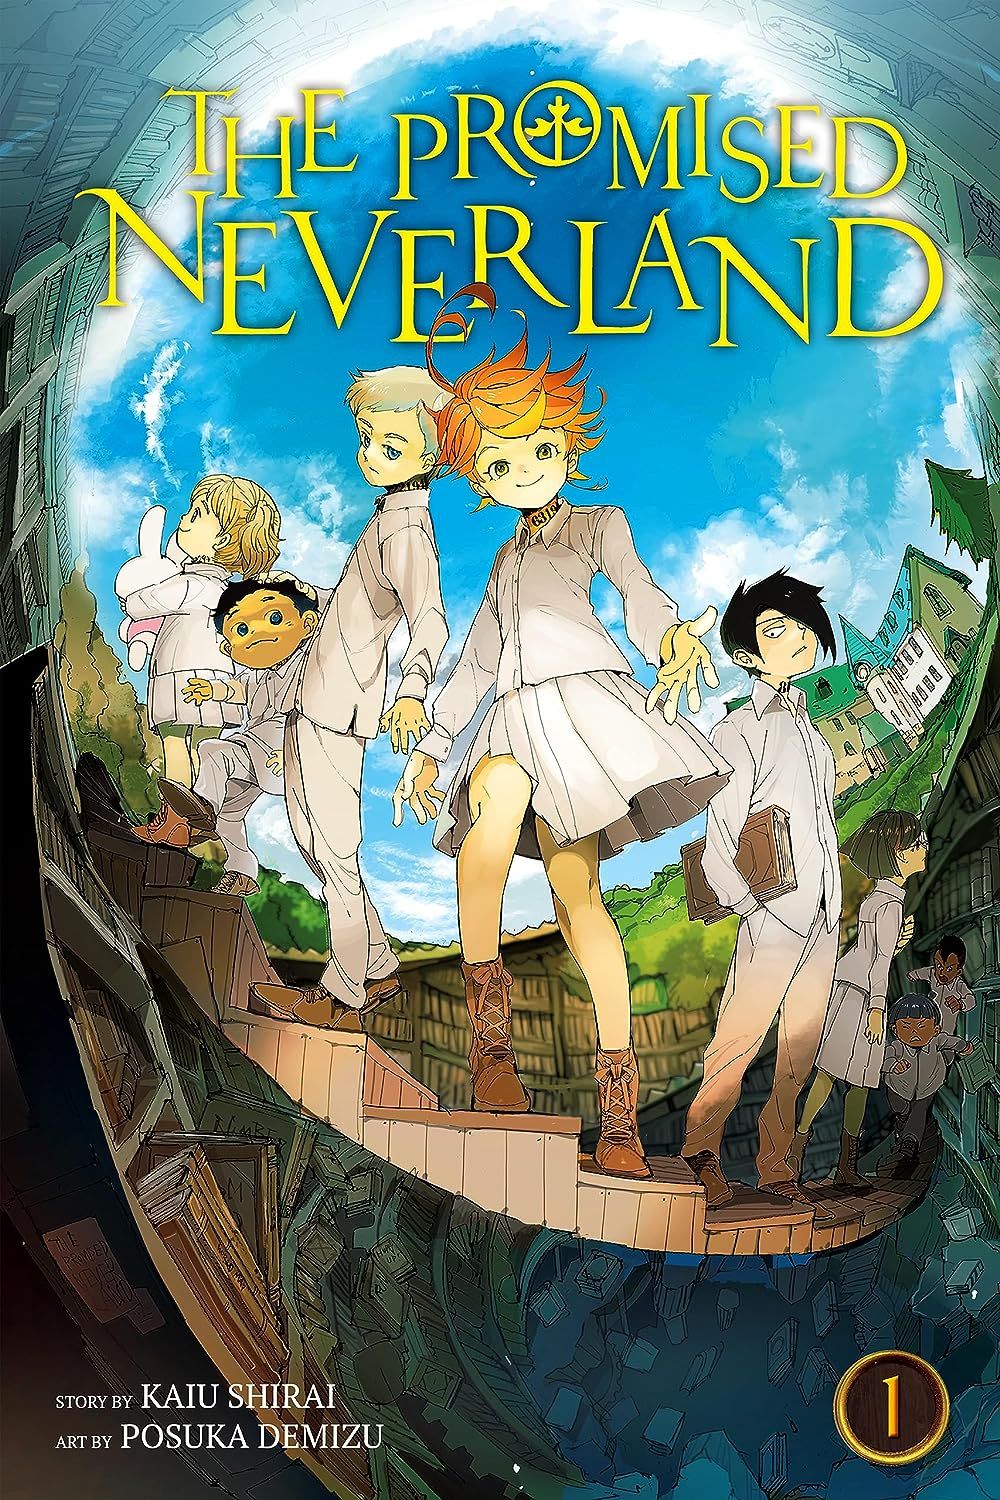 The Promised Neverland by Kaiu Shirai and Posuka Demizu cover